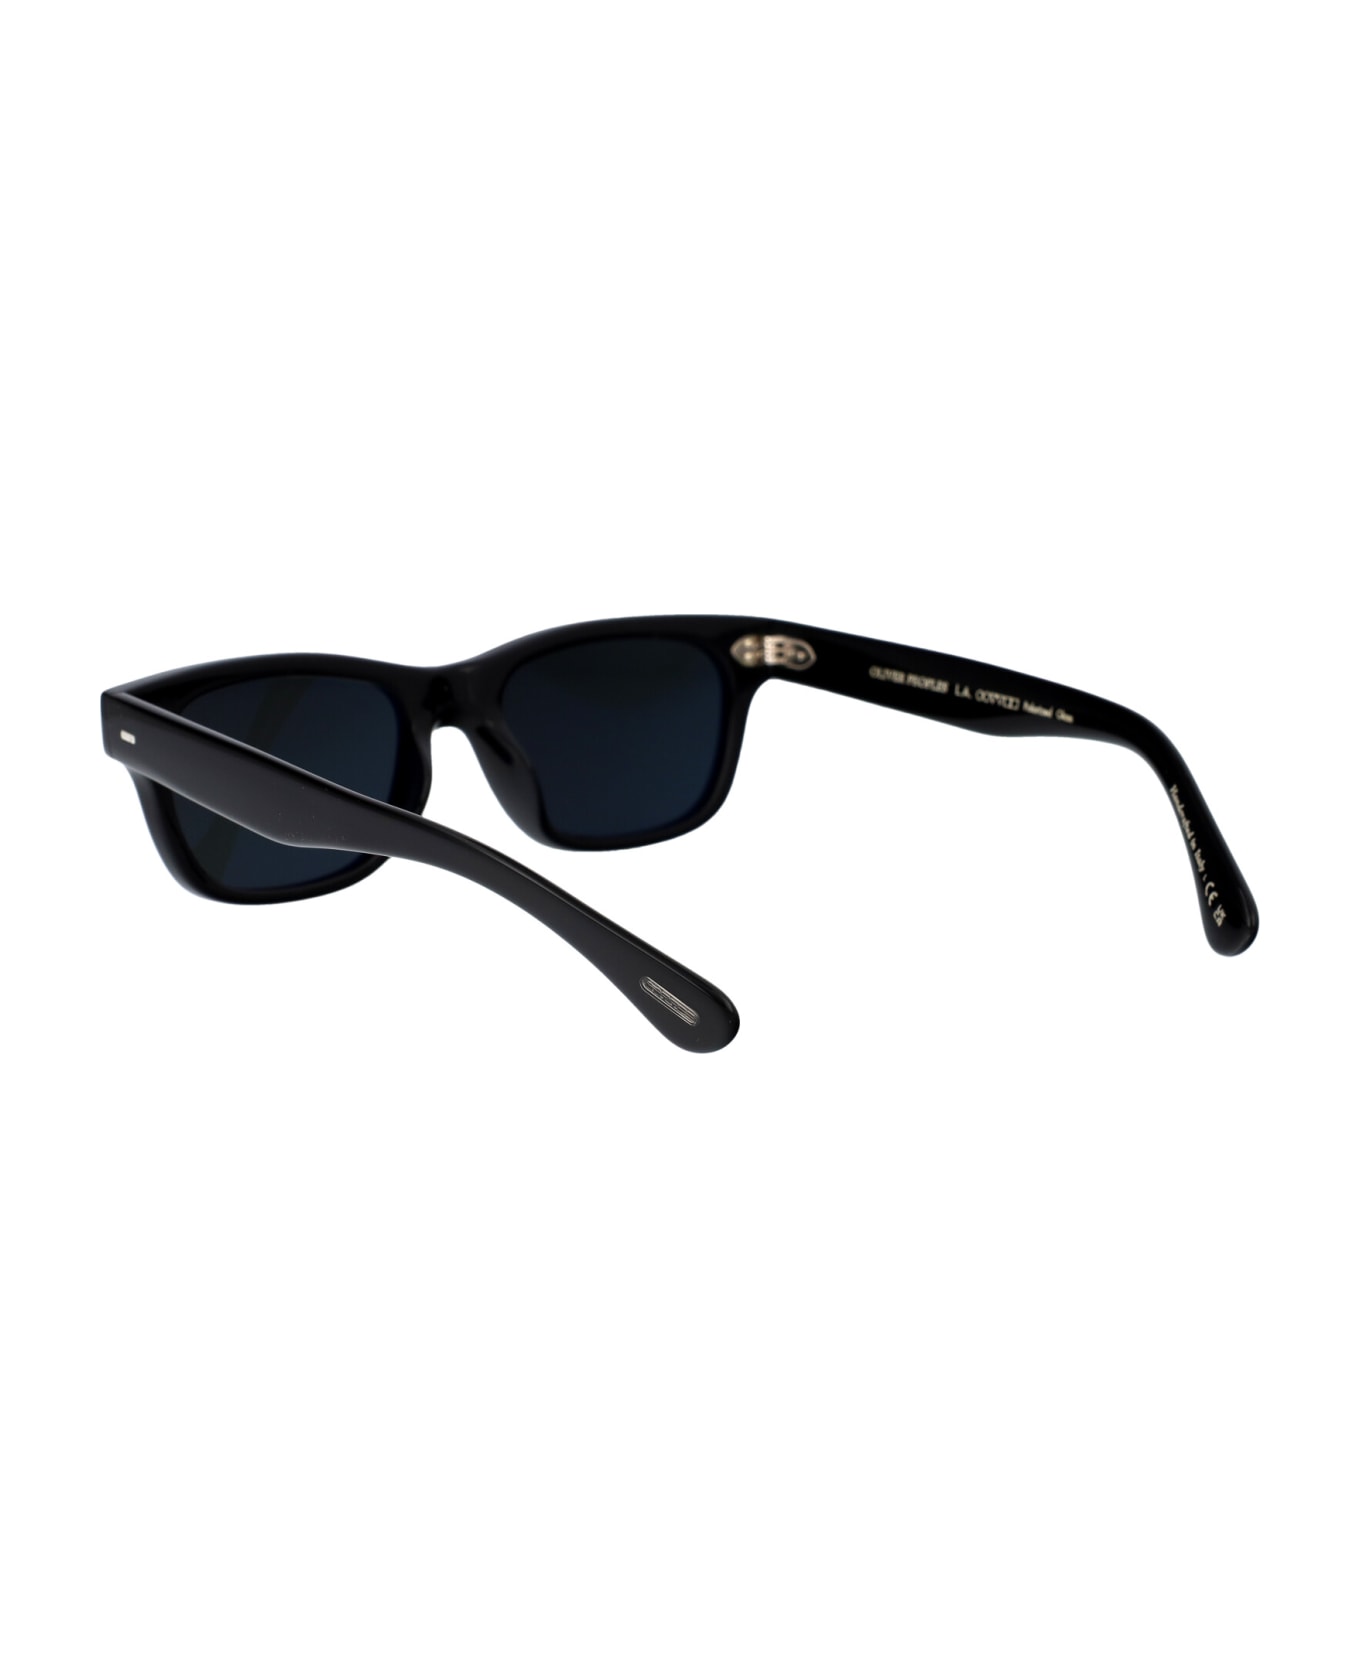 Oliver Peoples Rosson Sun Sunglasses - 1005P2 Black